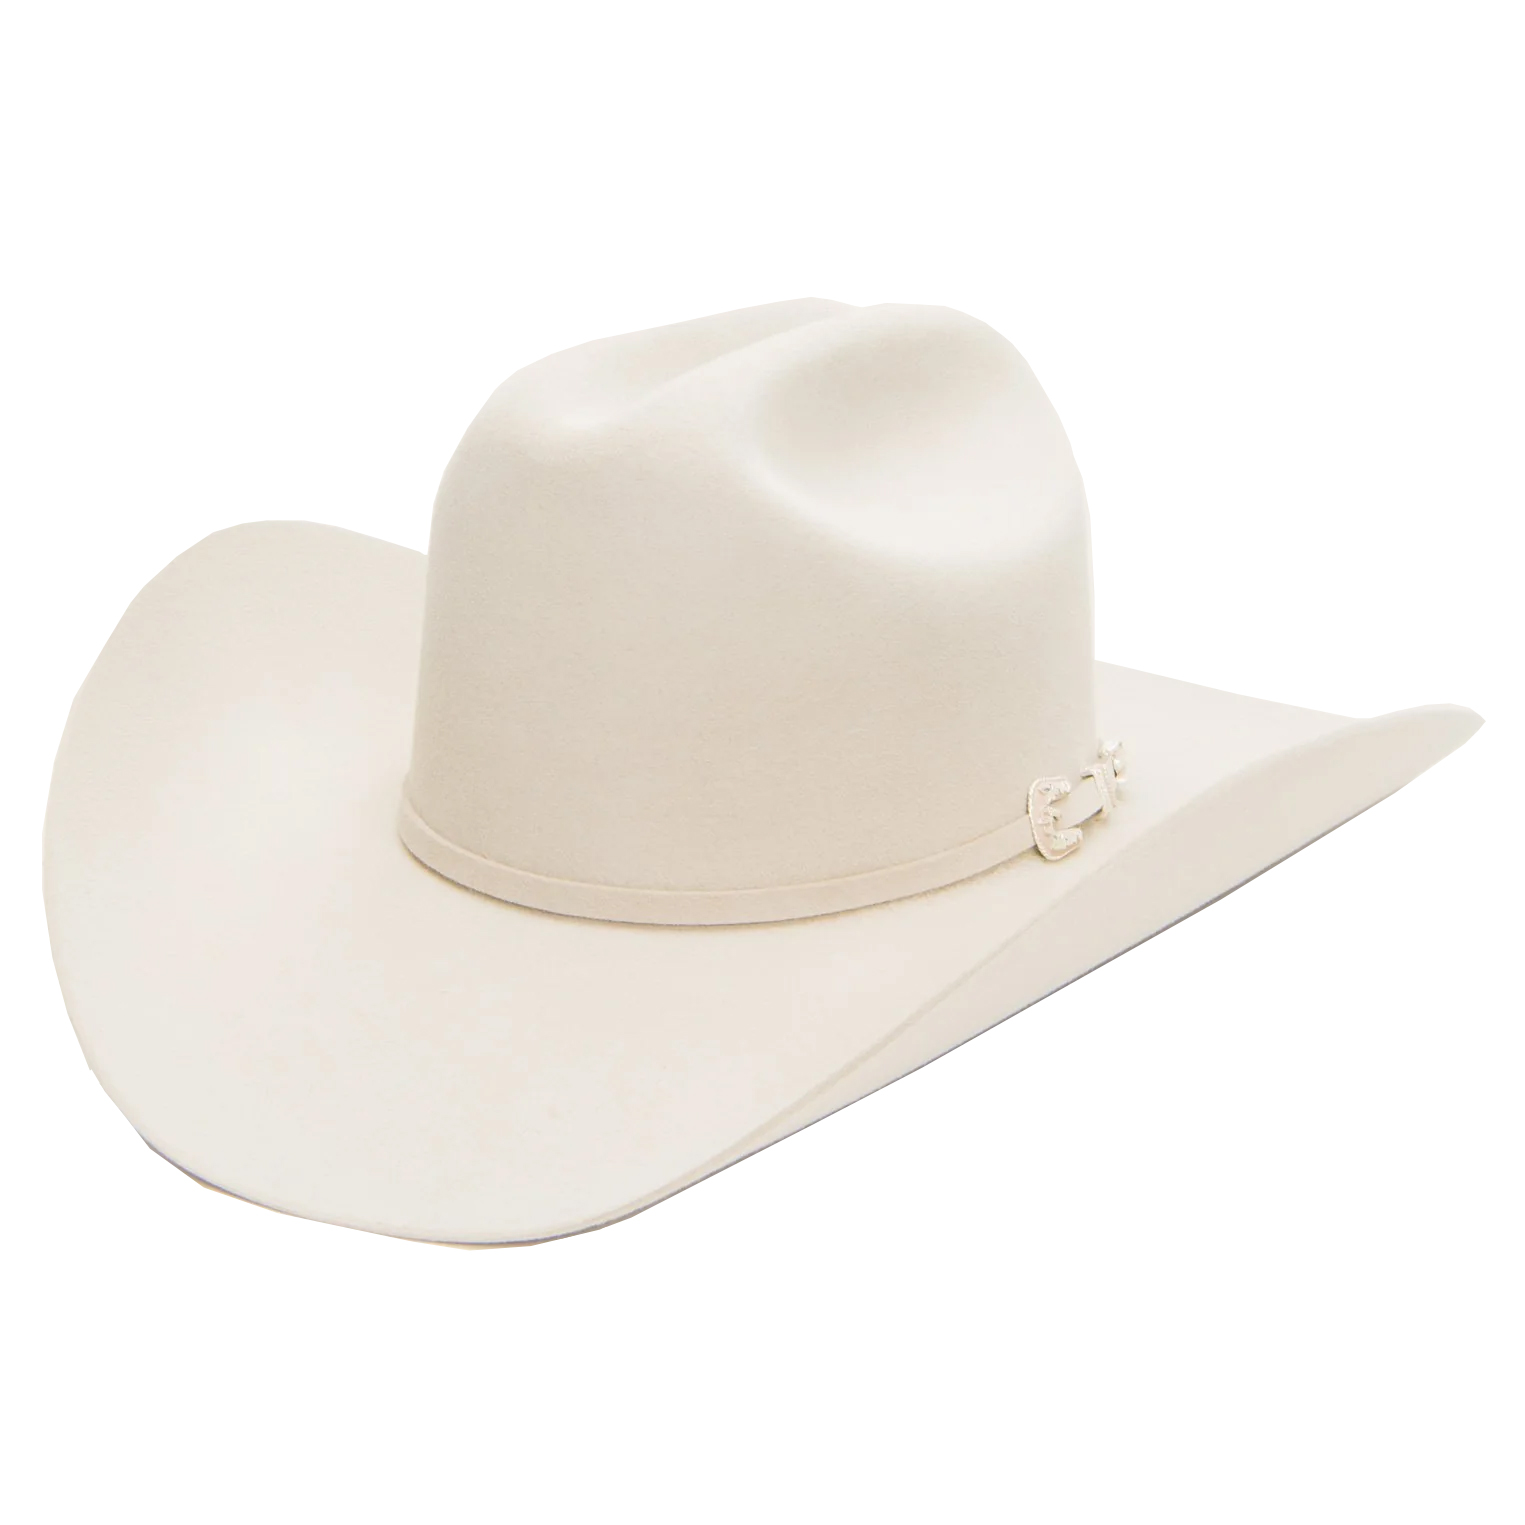 Stetson - Skyline 6x Cowboy Hat - Silverbelly